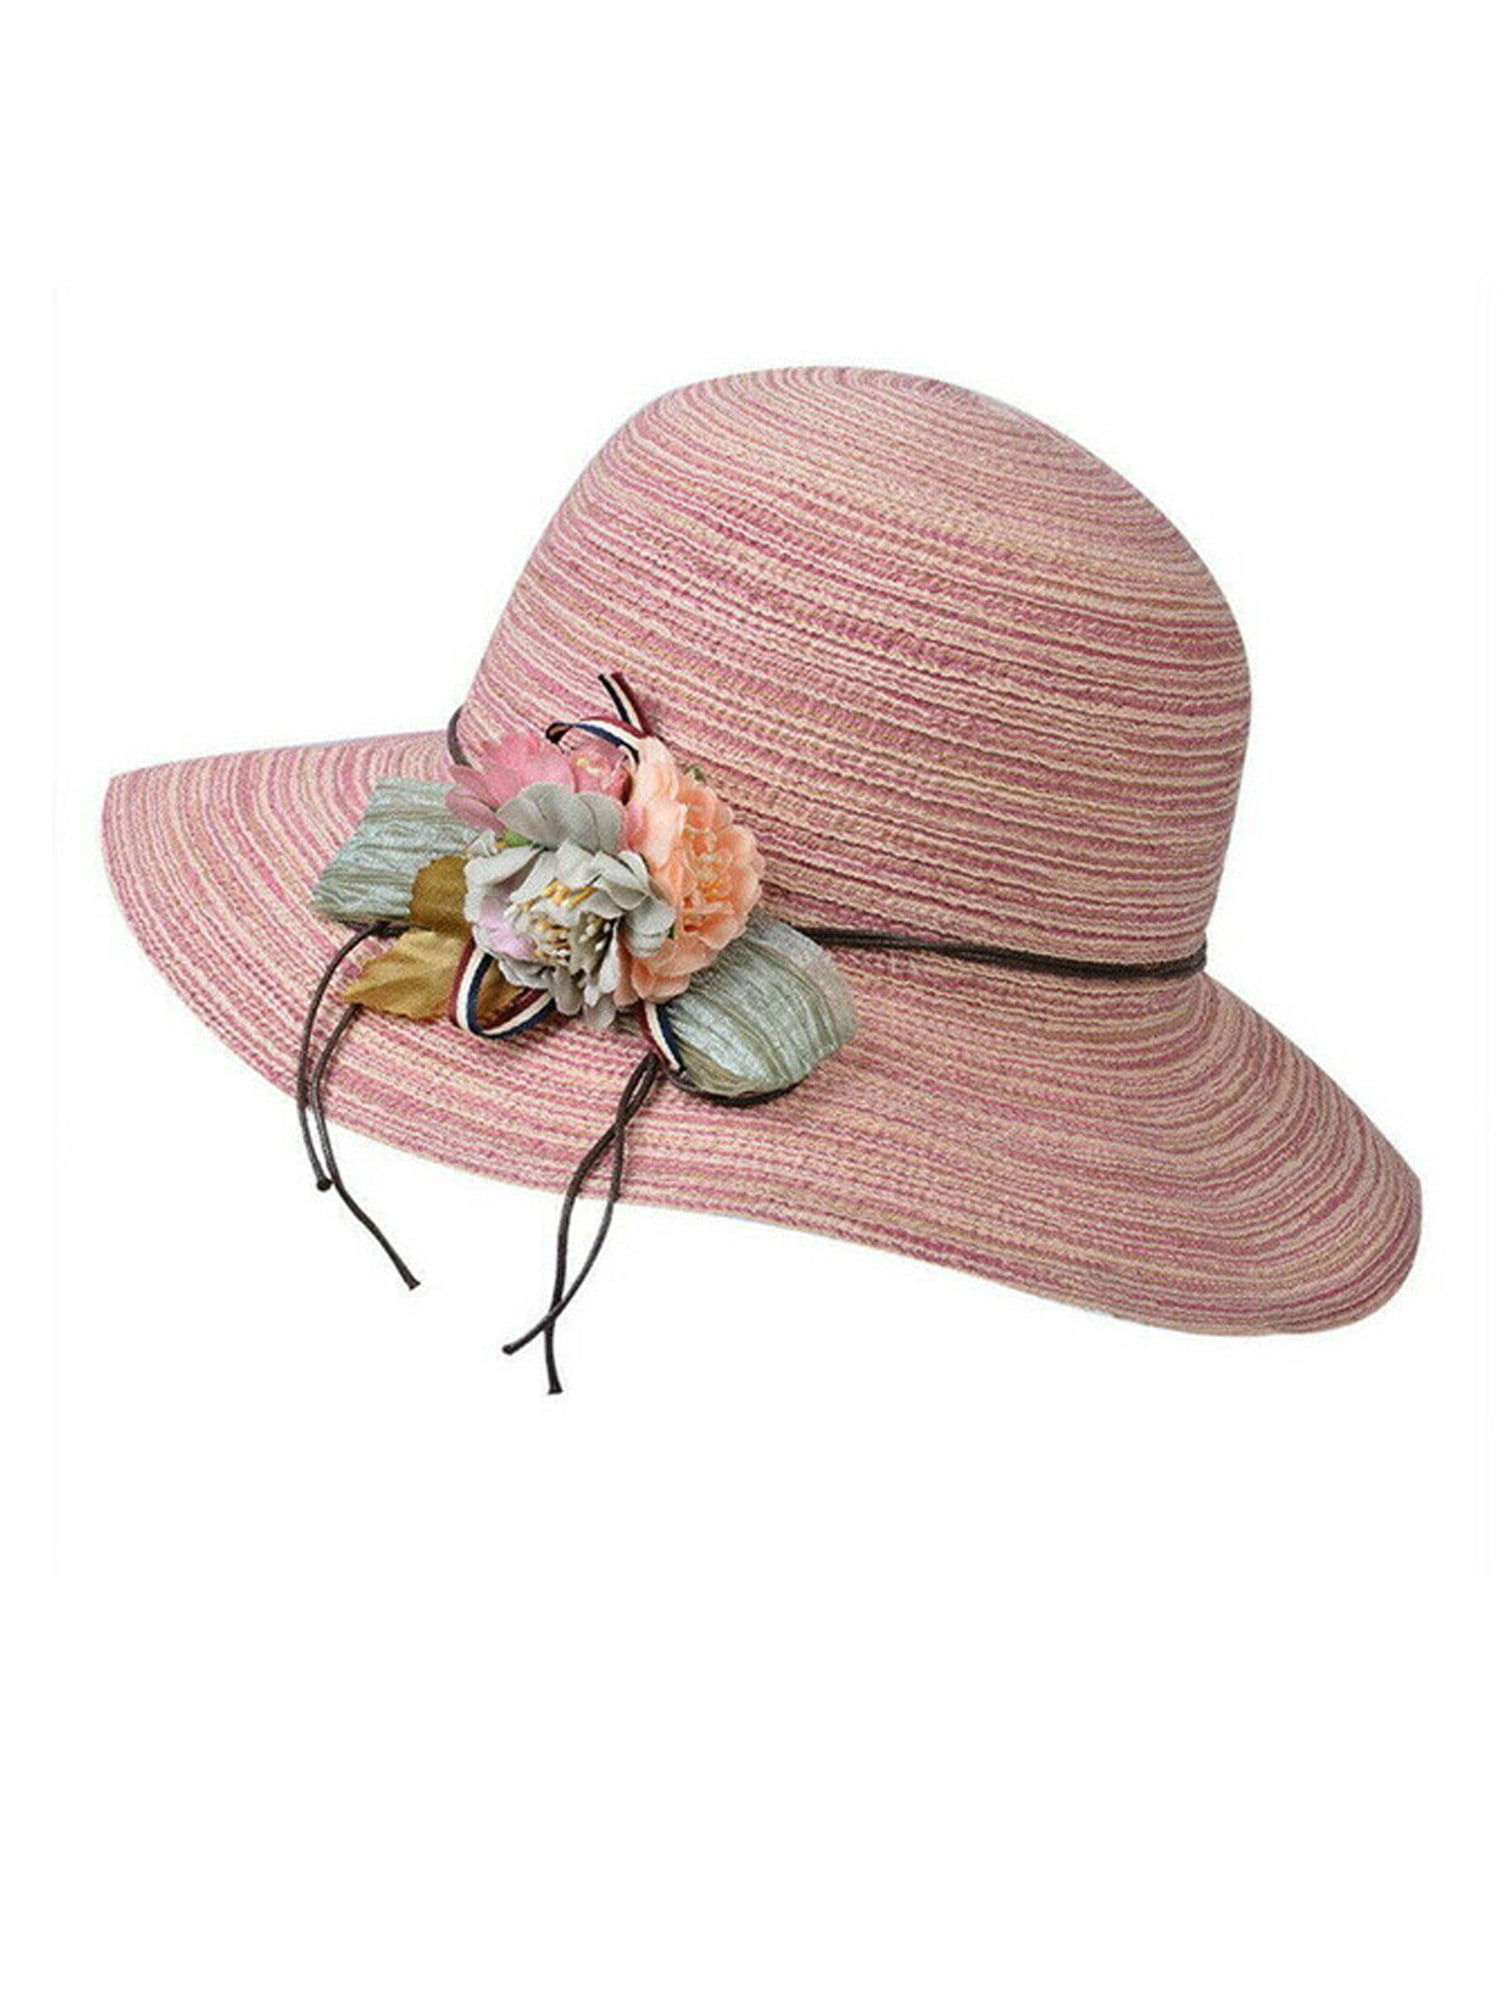 Bucket Hats for Women Lady Sun Hat Summer Party Boho Hat Beach Wide Brim Cap